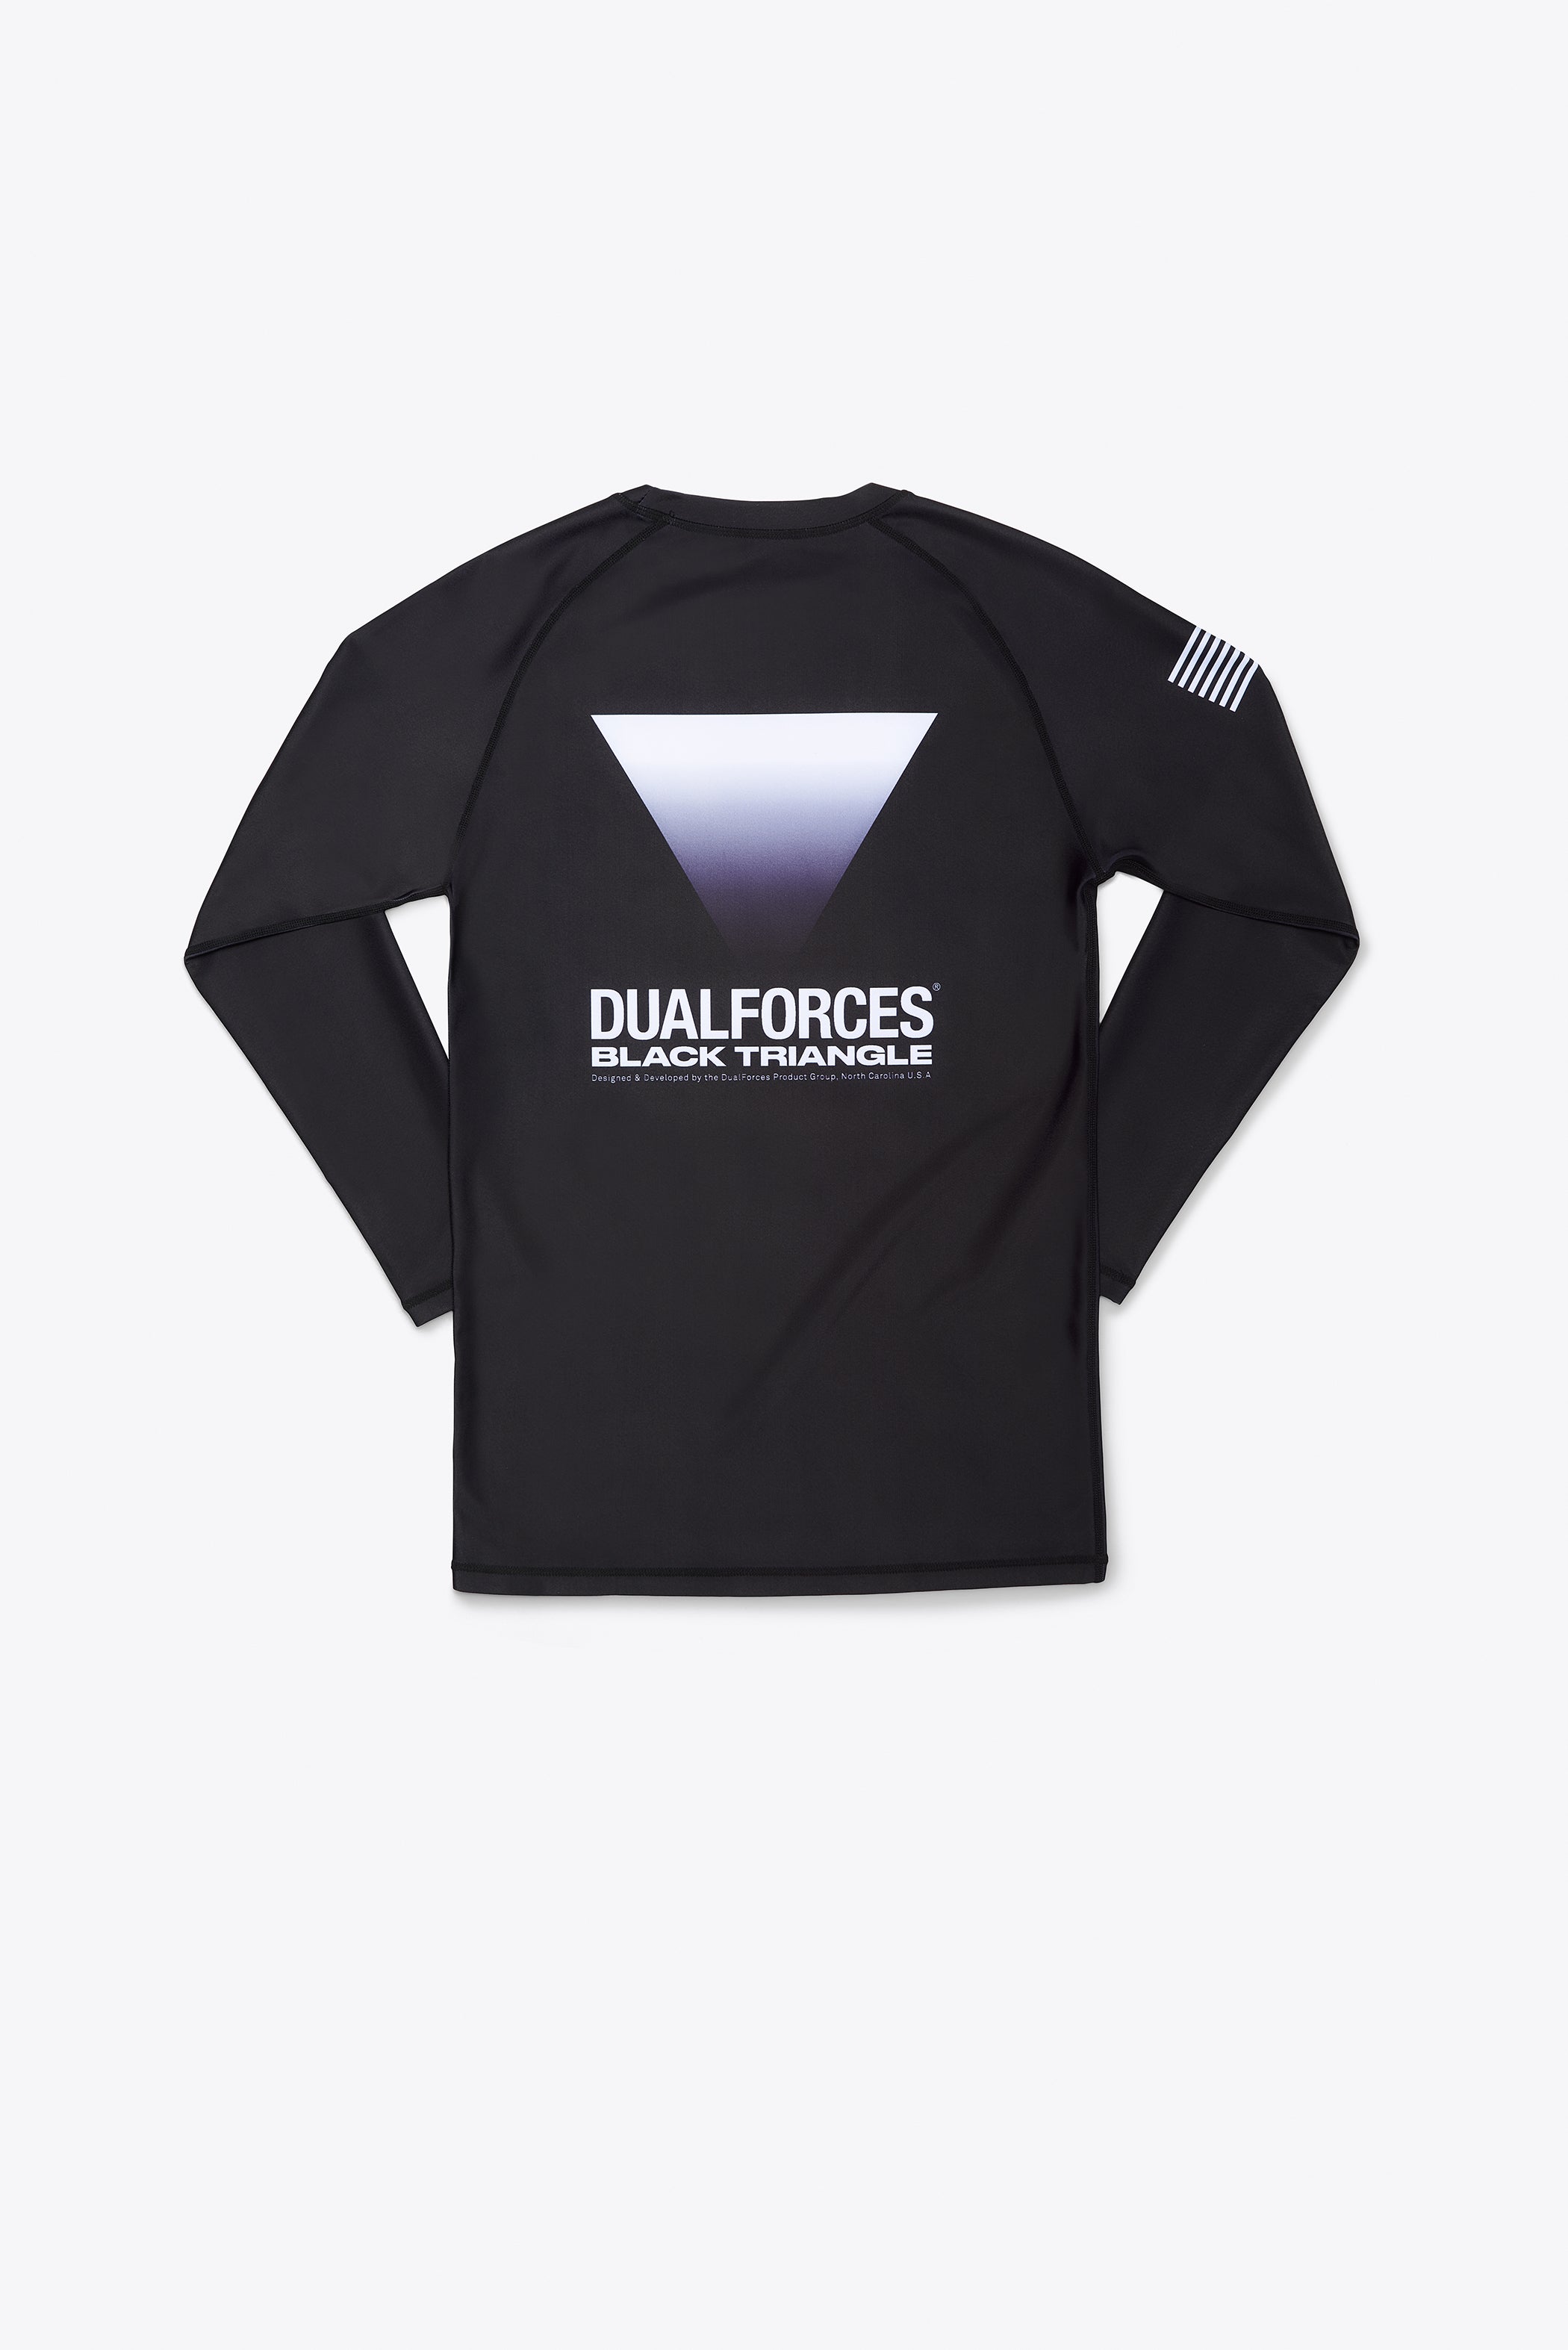 DualForces x Black Triangle Long Sleeve Rash Guard